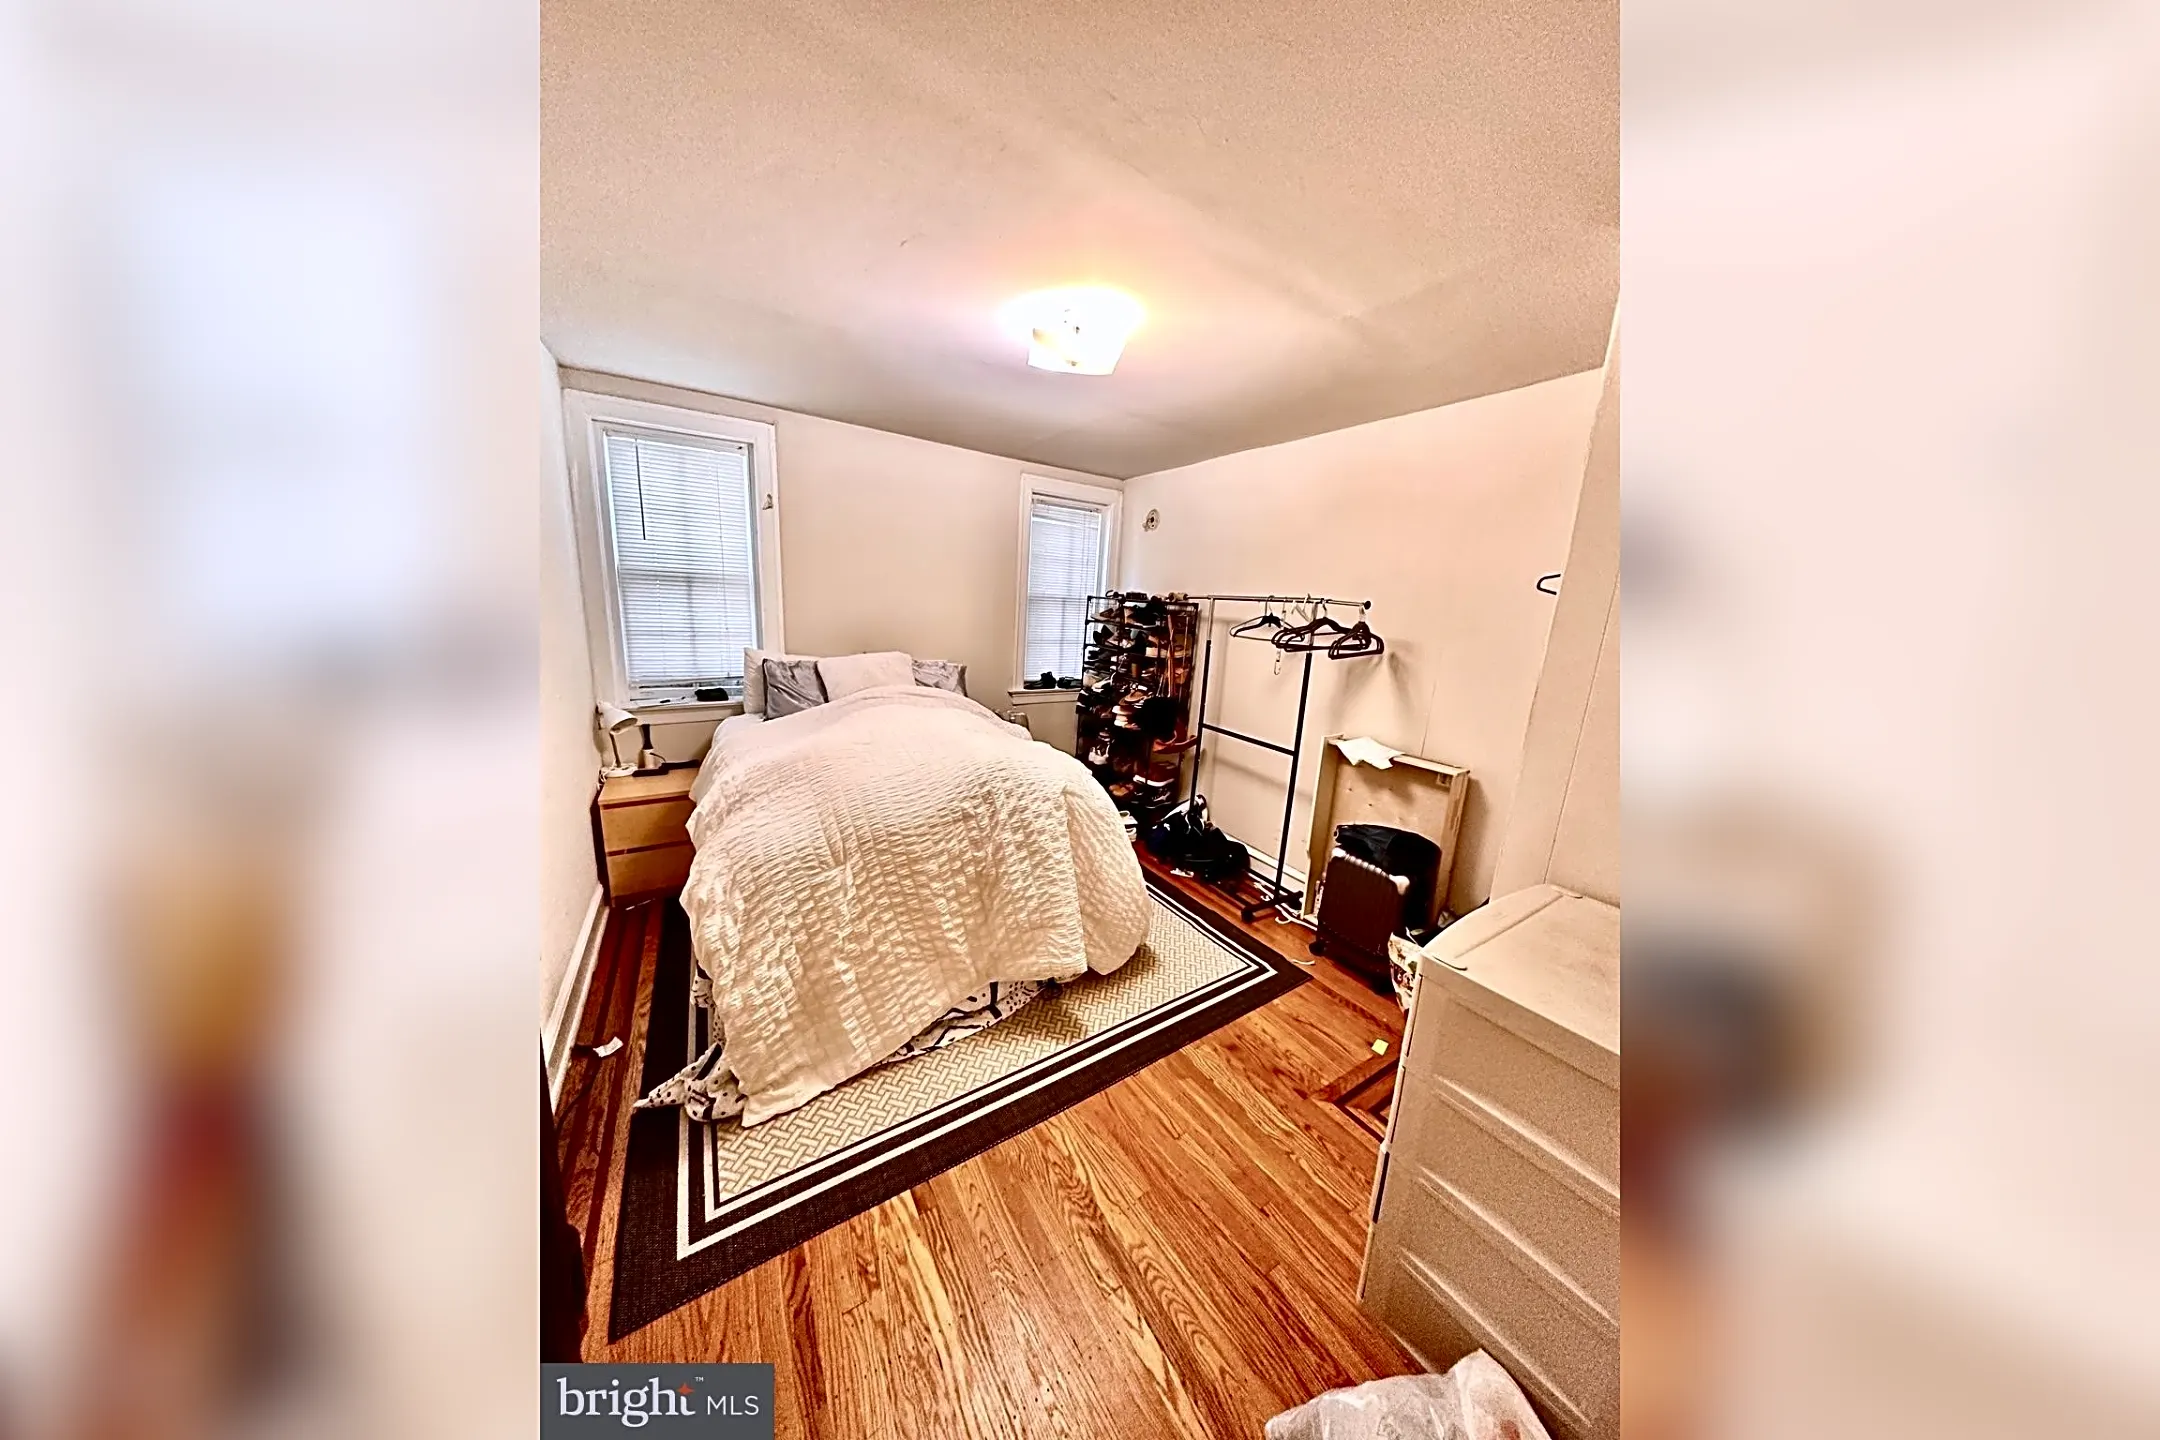 Bedroom - 504 W Coulter St #2 - Philadelphia, PA